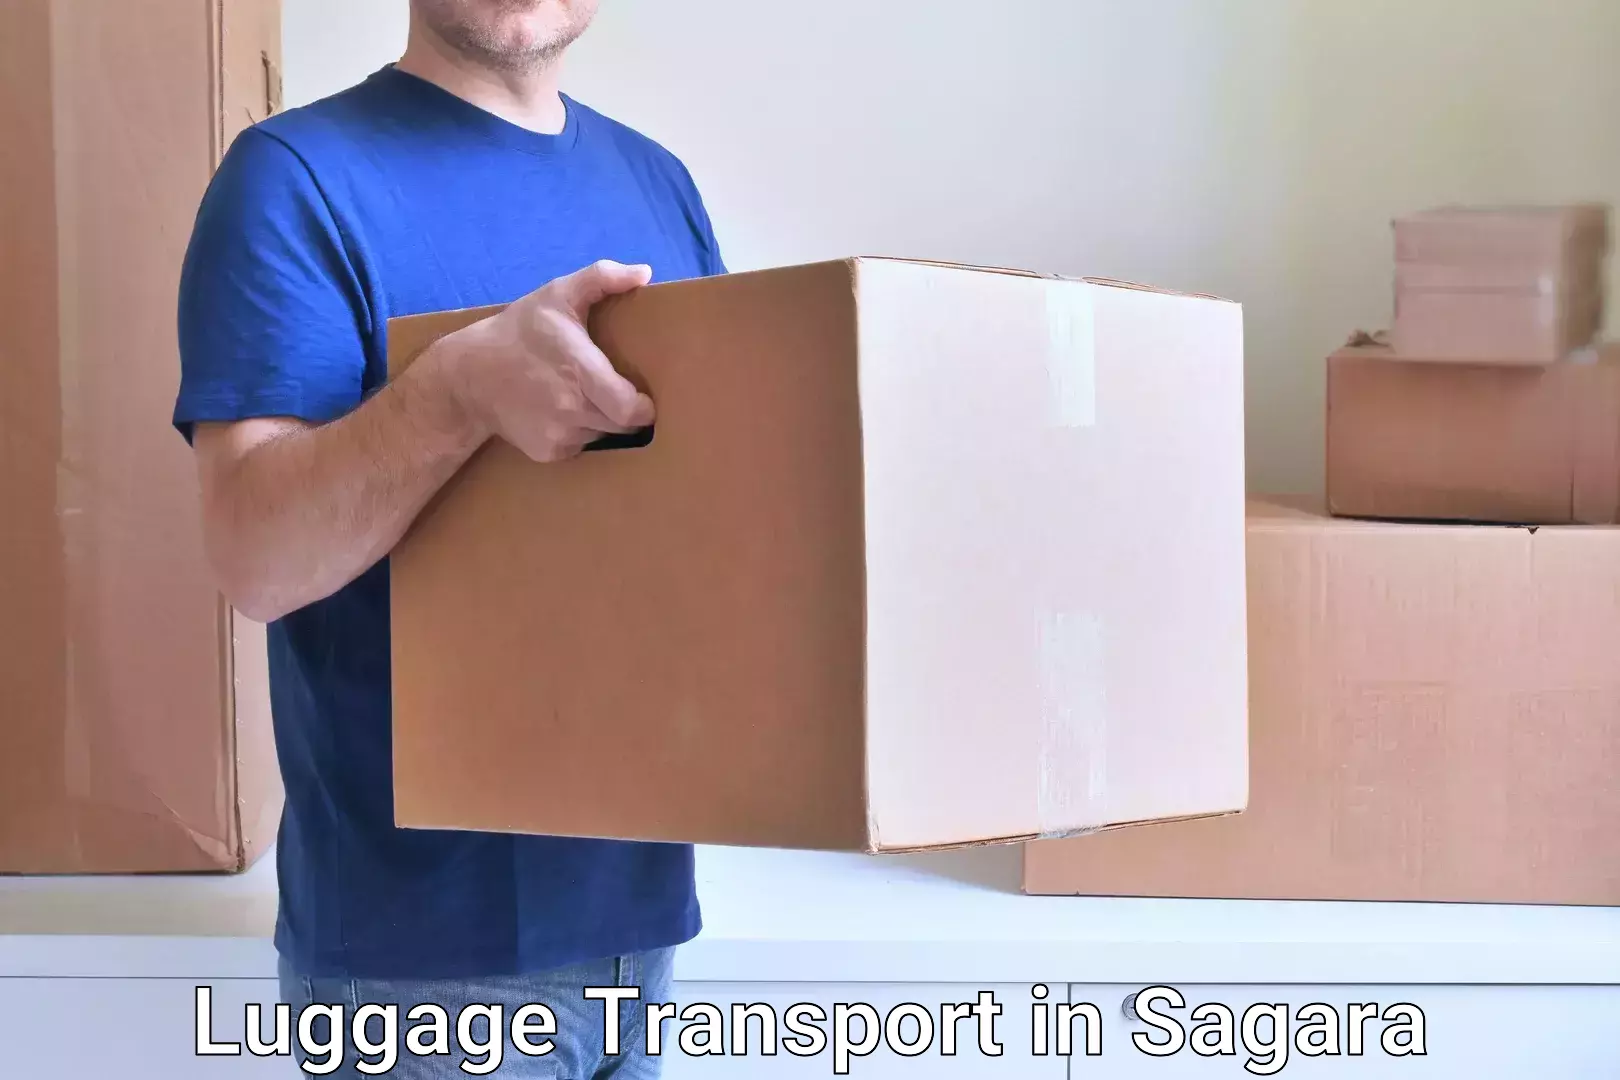 Luggage shipping planner in Sagara